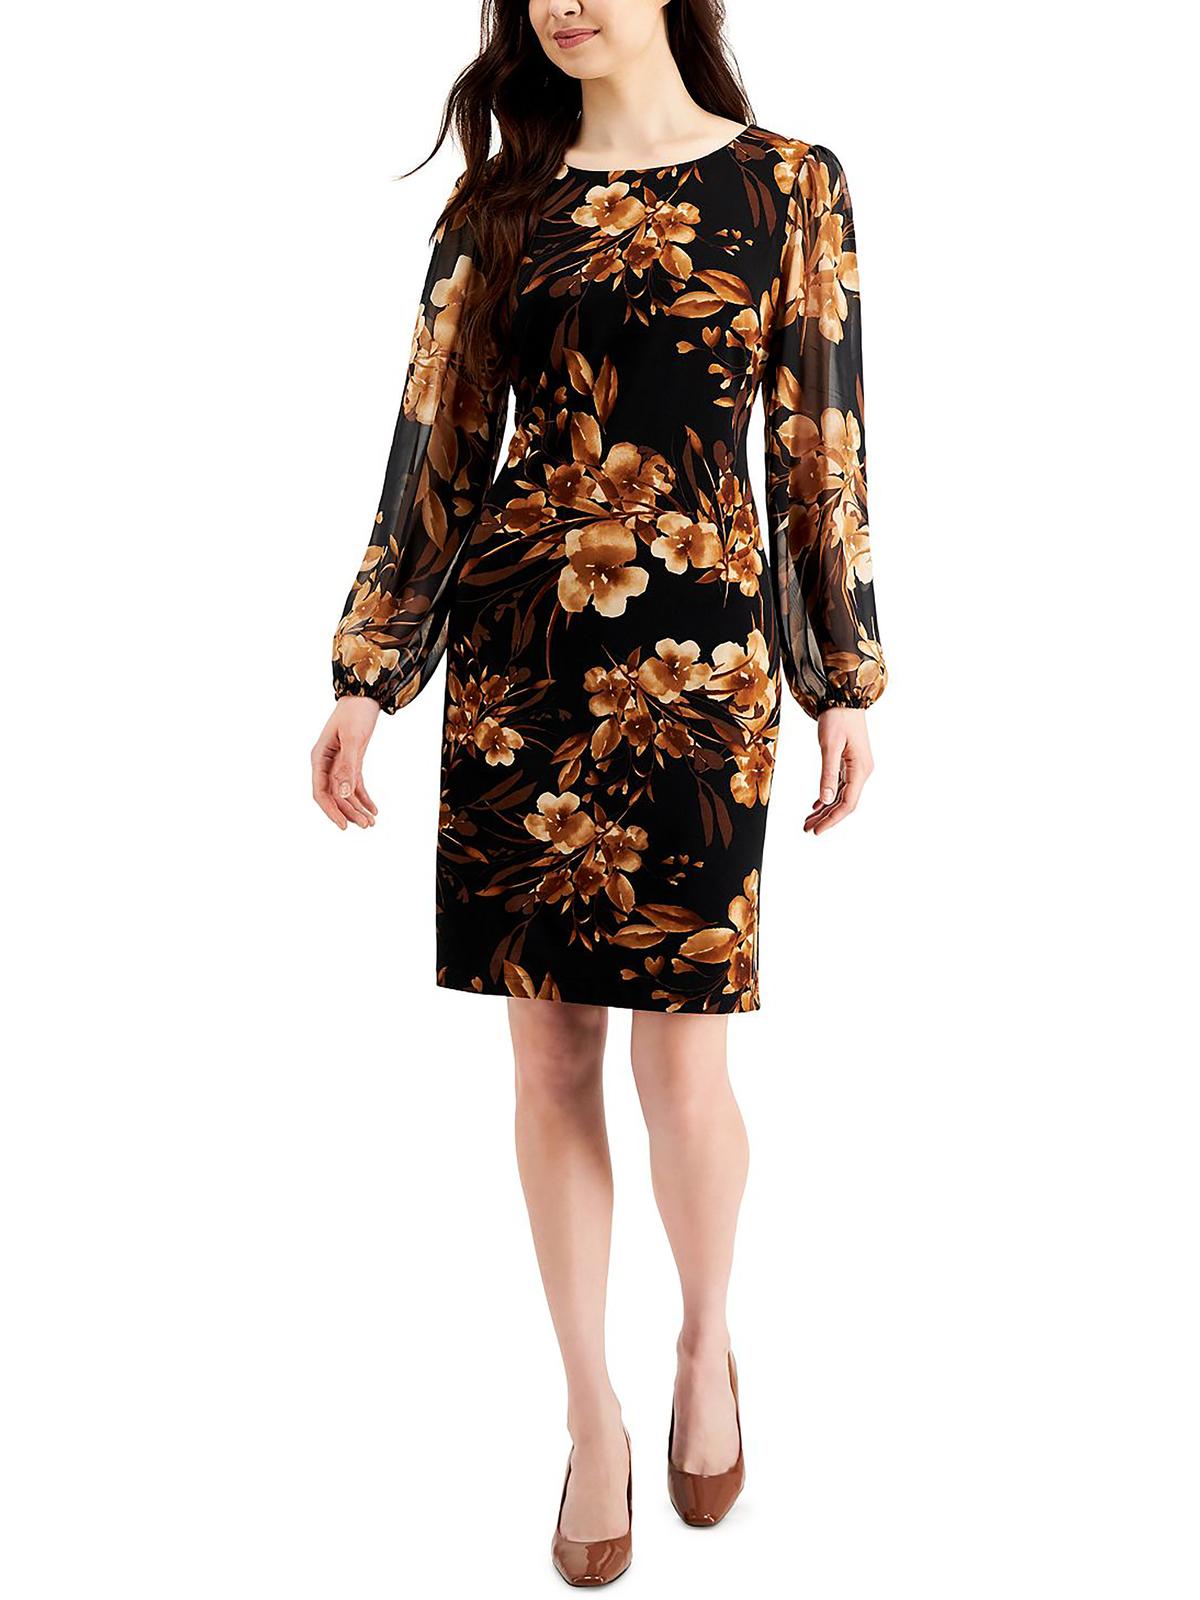 CONNECTED APPAREL Womens Matte Jersey Floral Shift Dress